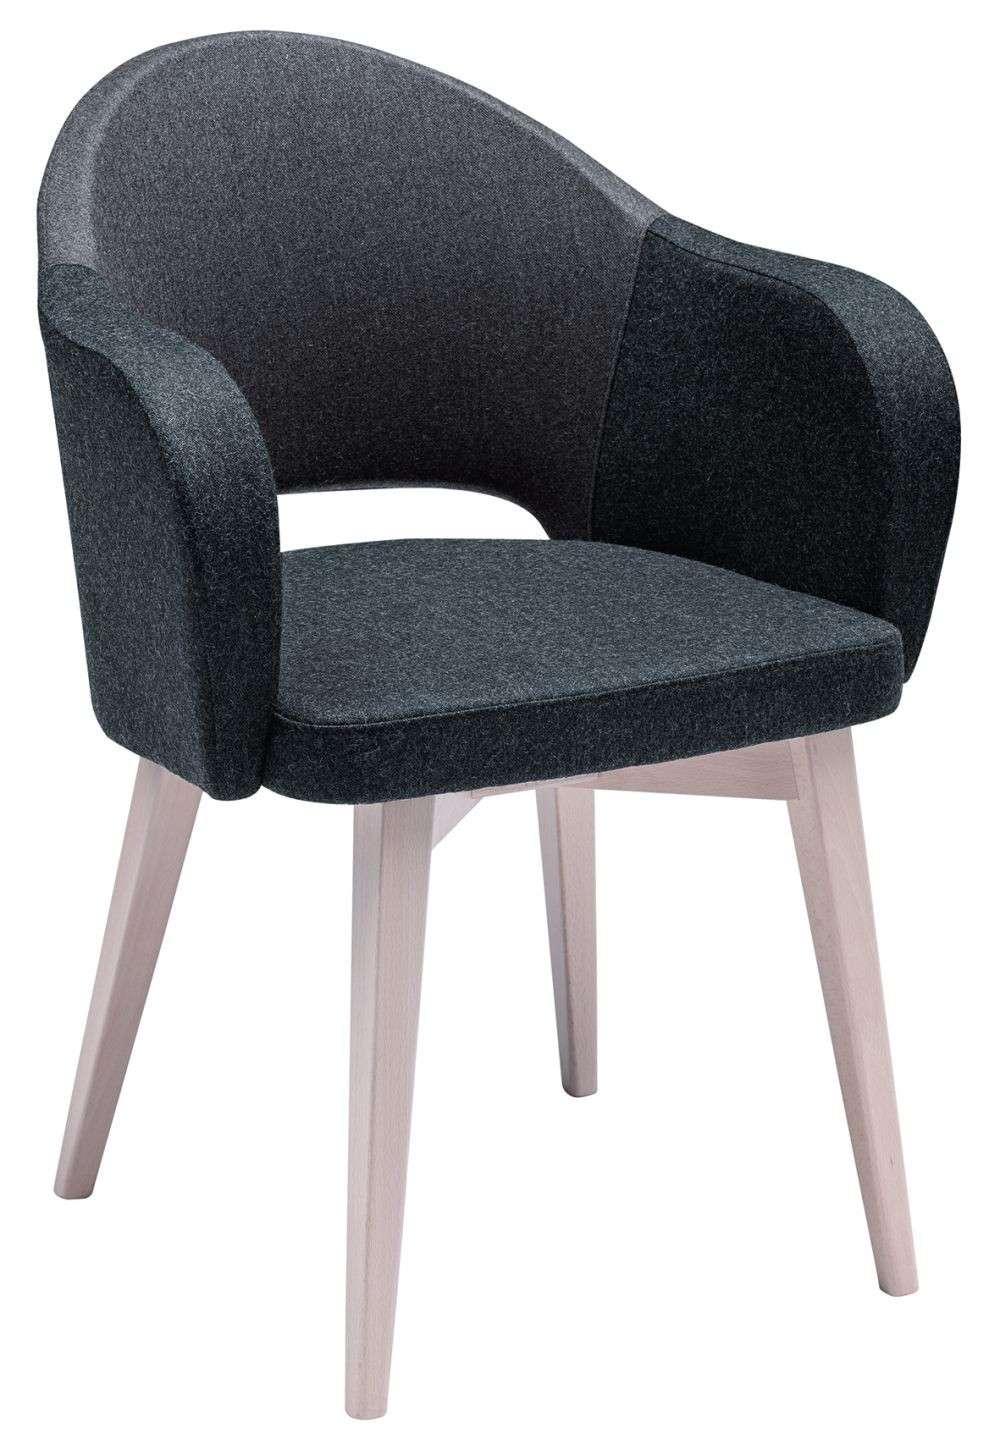 silla n butaca para restaurantes tapizado chaise armchair wood orlando upholstered chairs